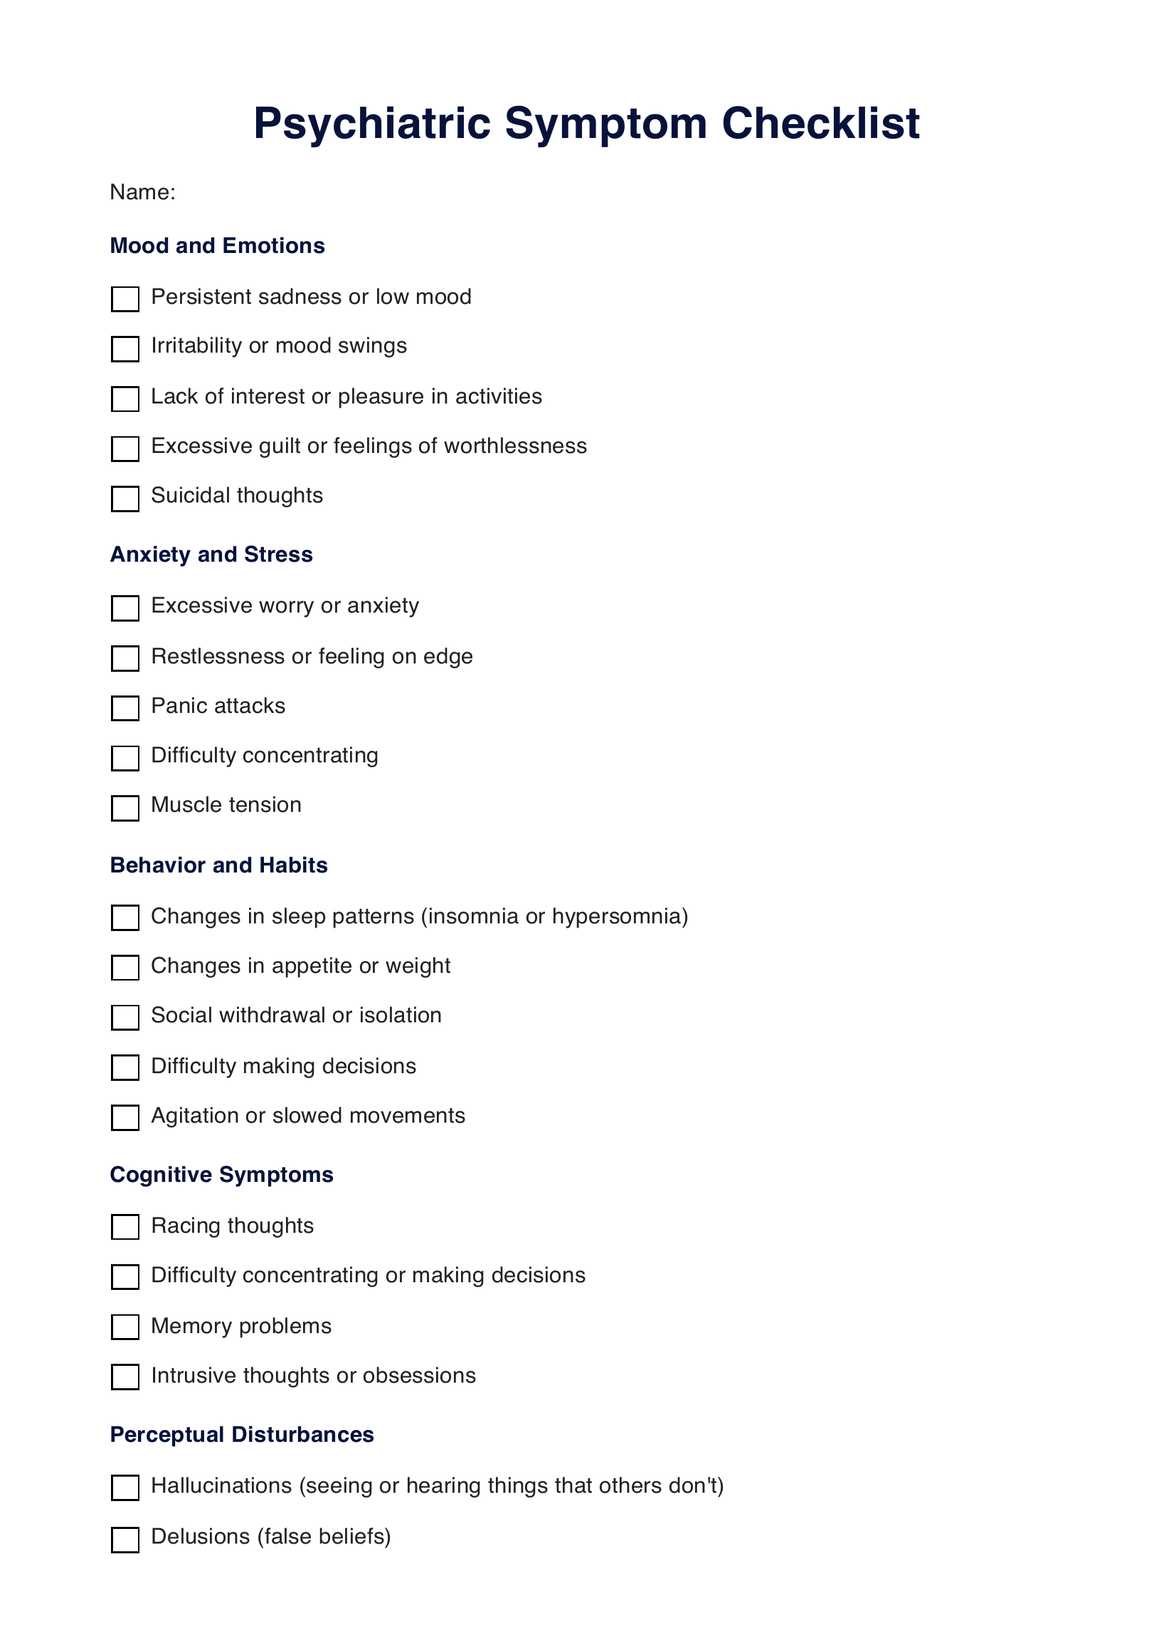 Psychiatric Symptom Checklist PDF Example